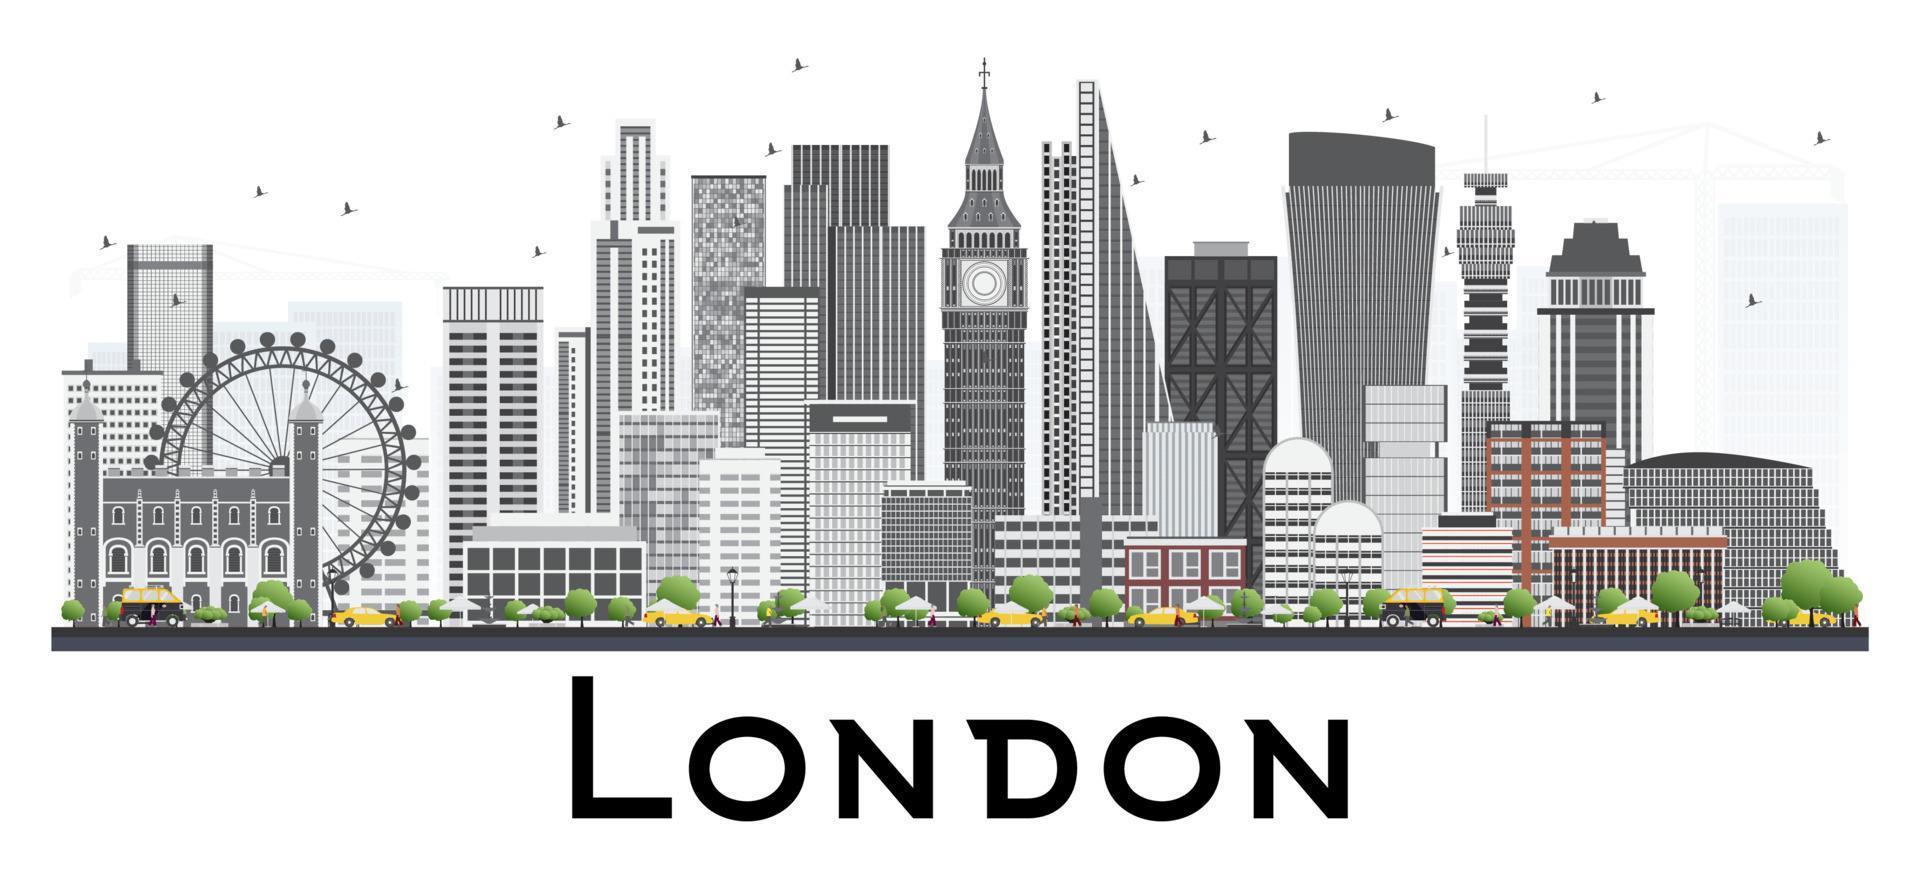 London horisont med grå byggnader. vektor